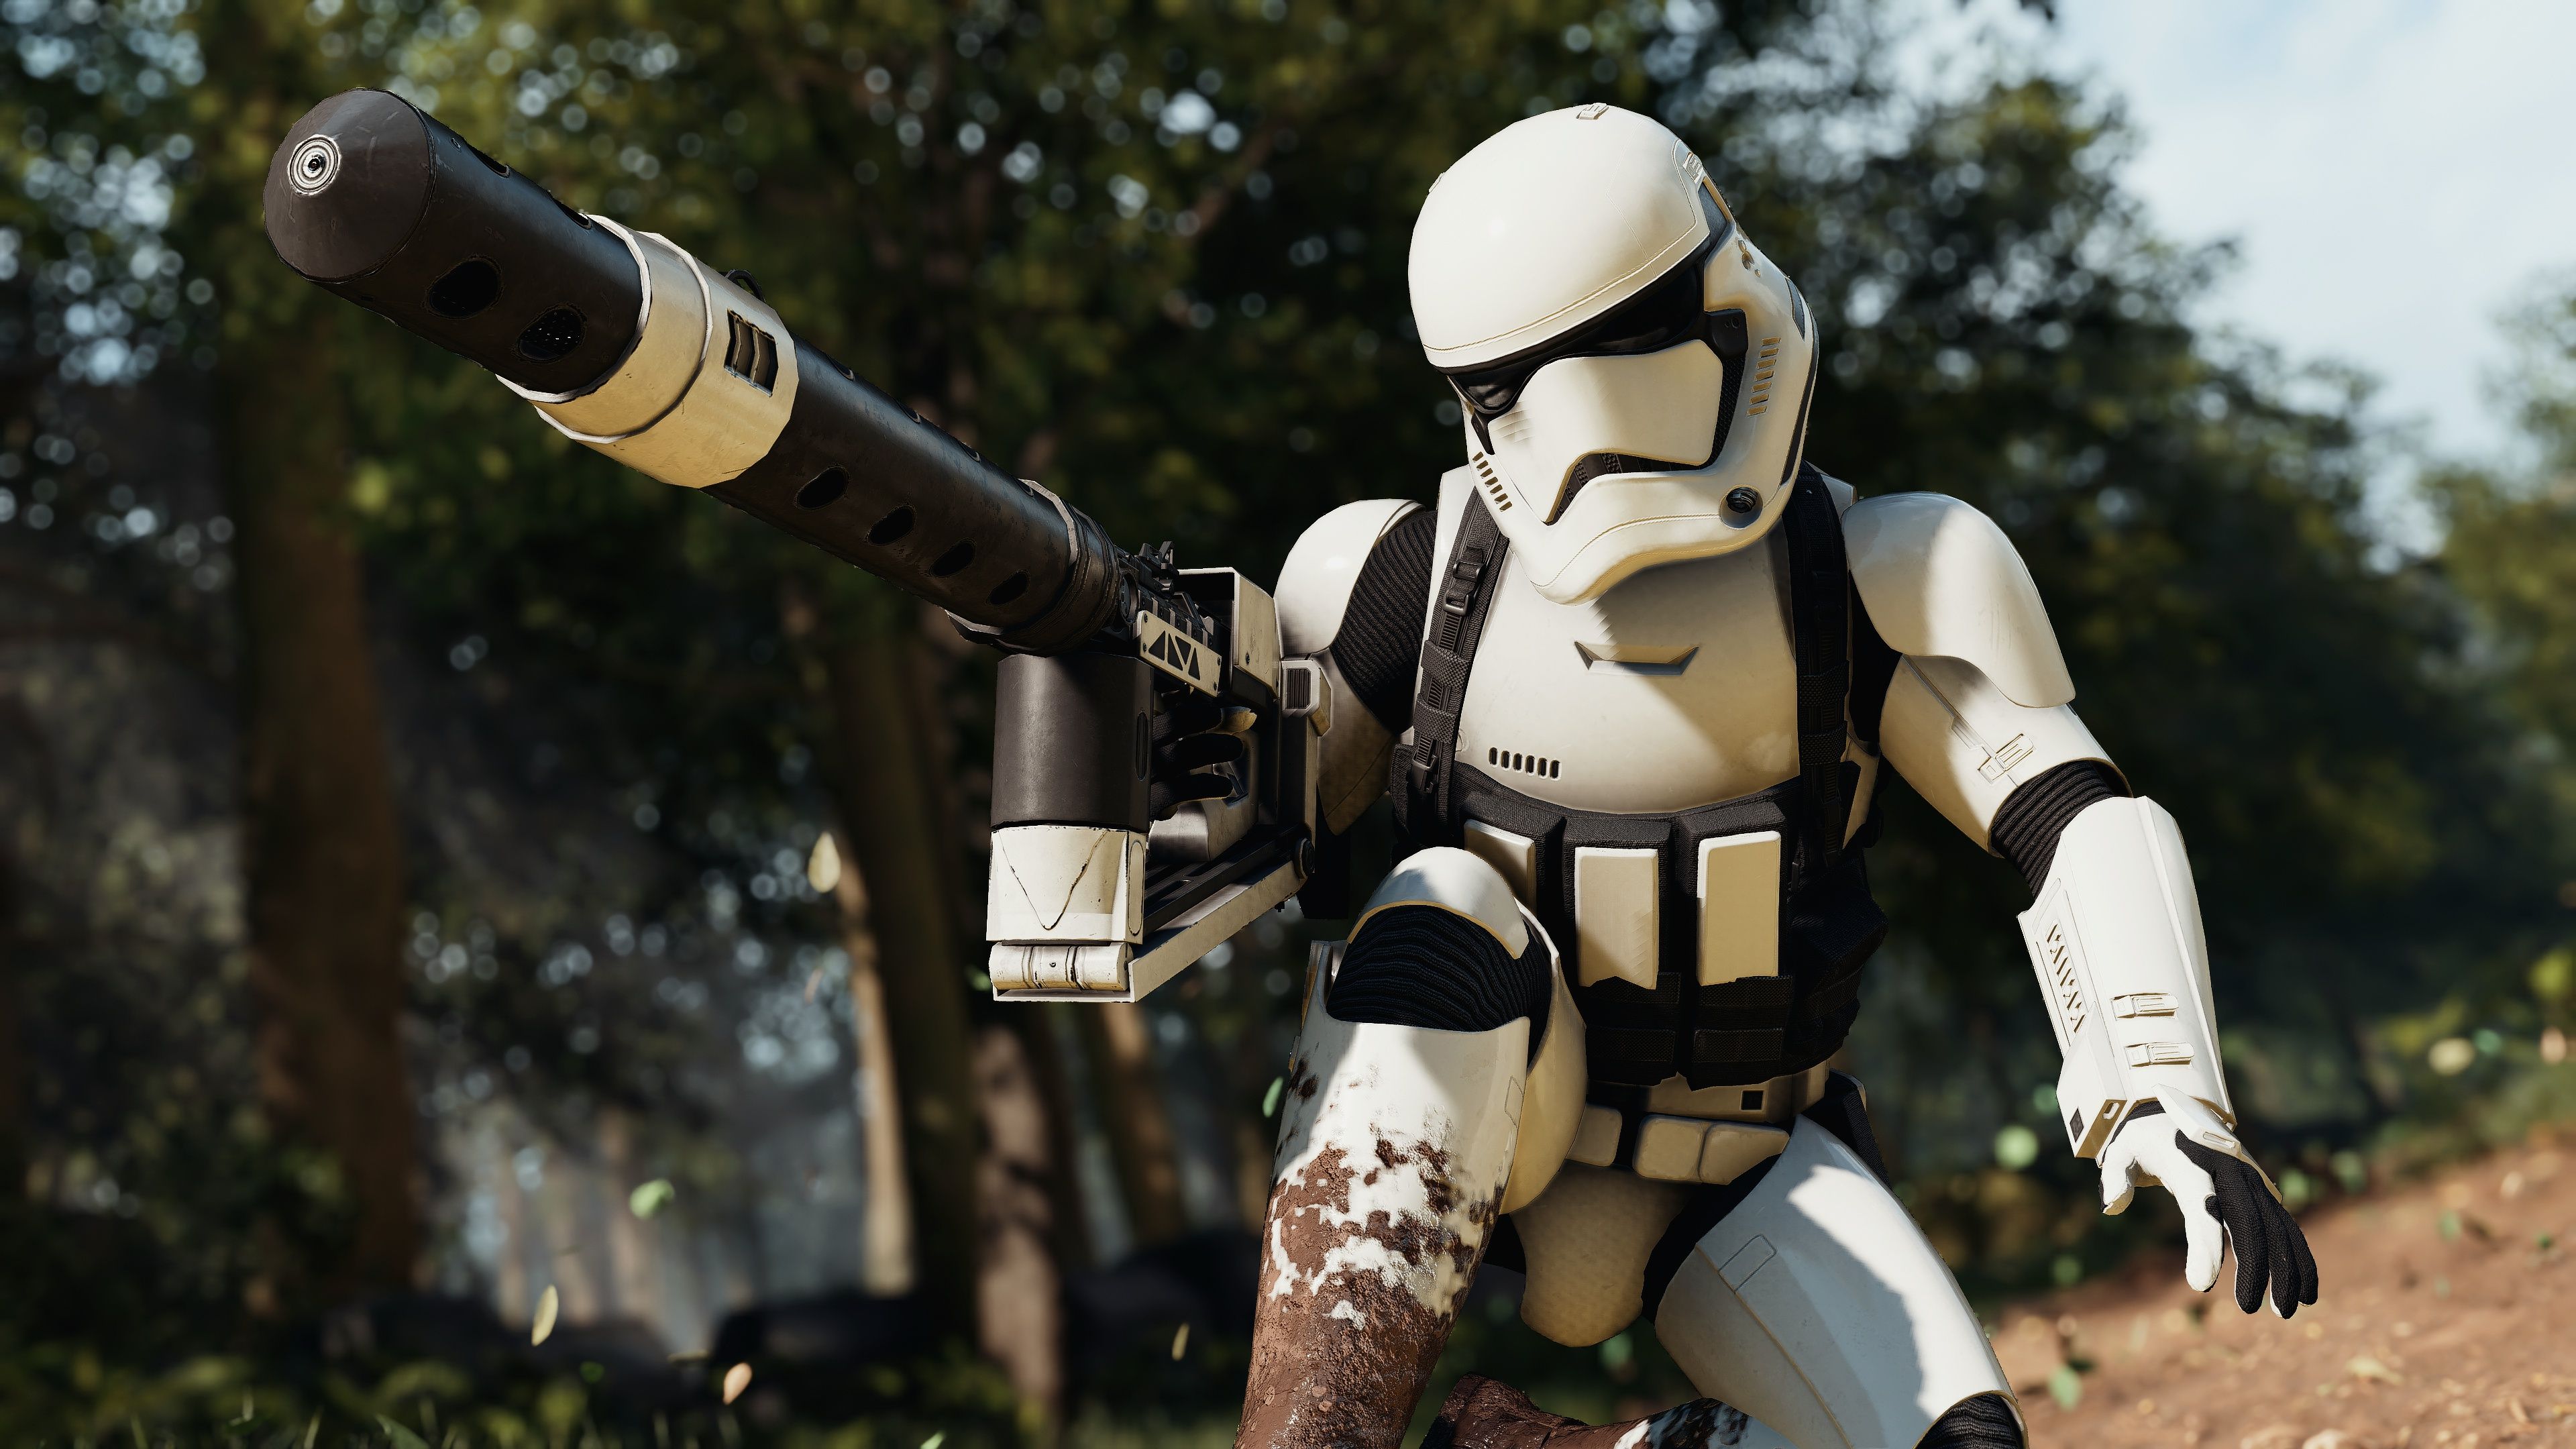 Stormtrooper Star Wars Battlefront 2 4k, HD Games, 4k Wallpaper, Image, Background, Photo and Picture